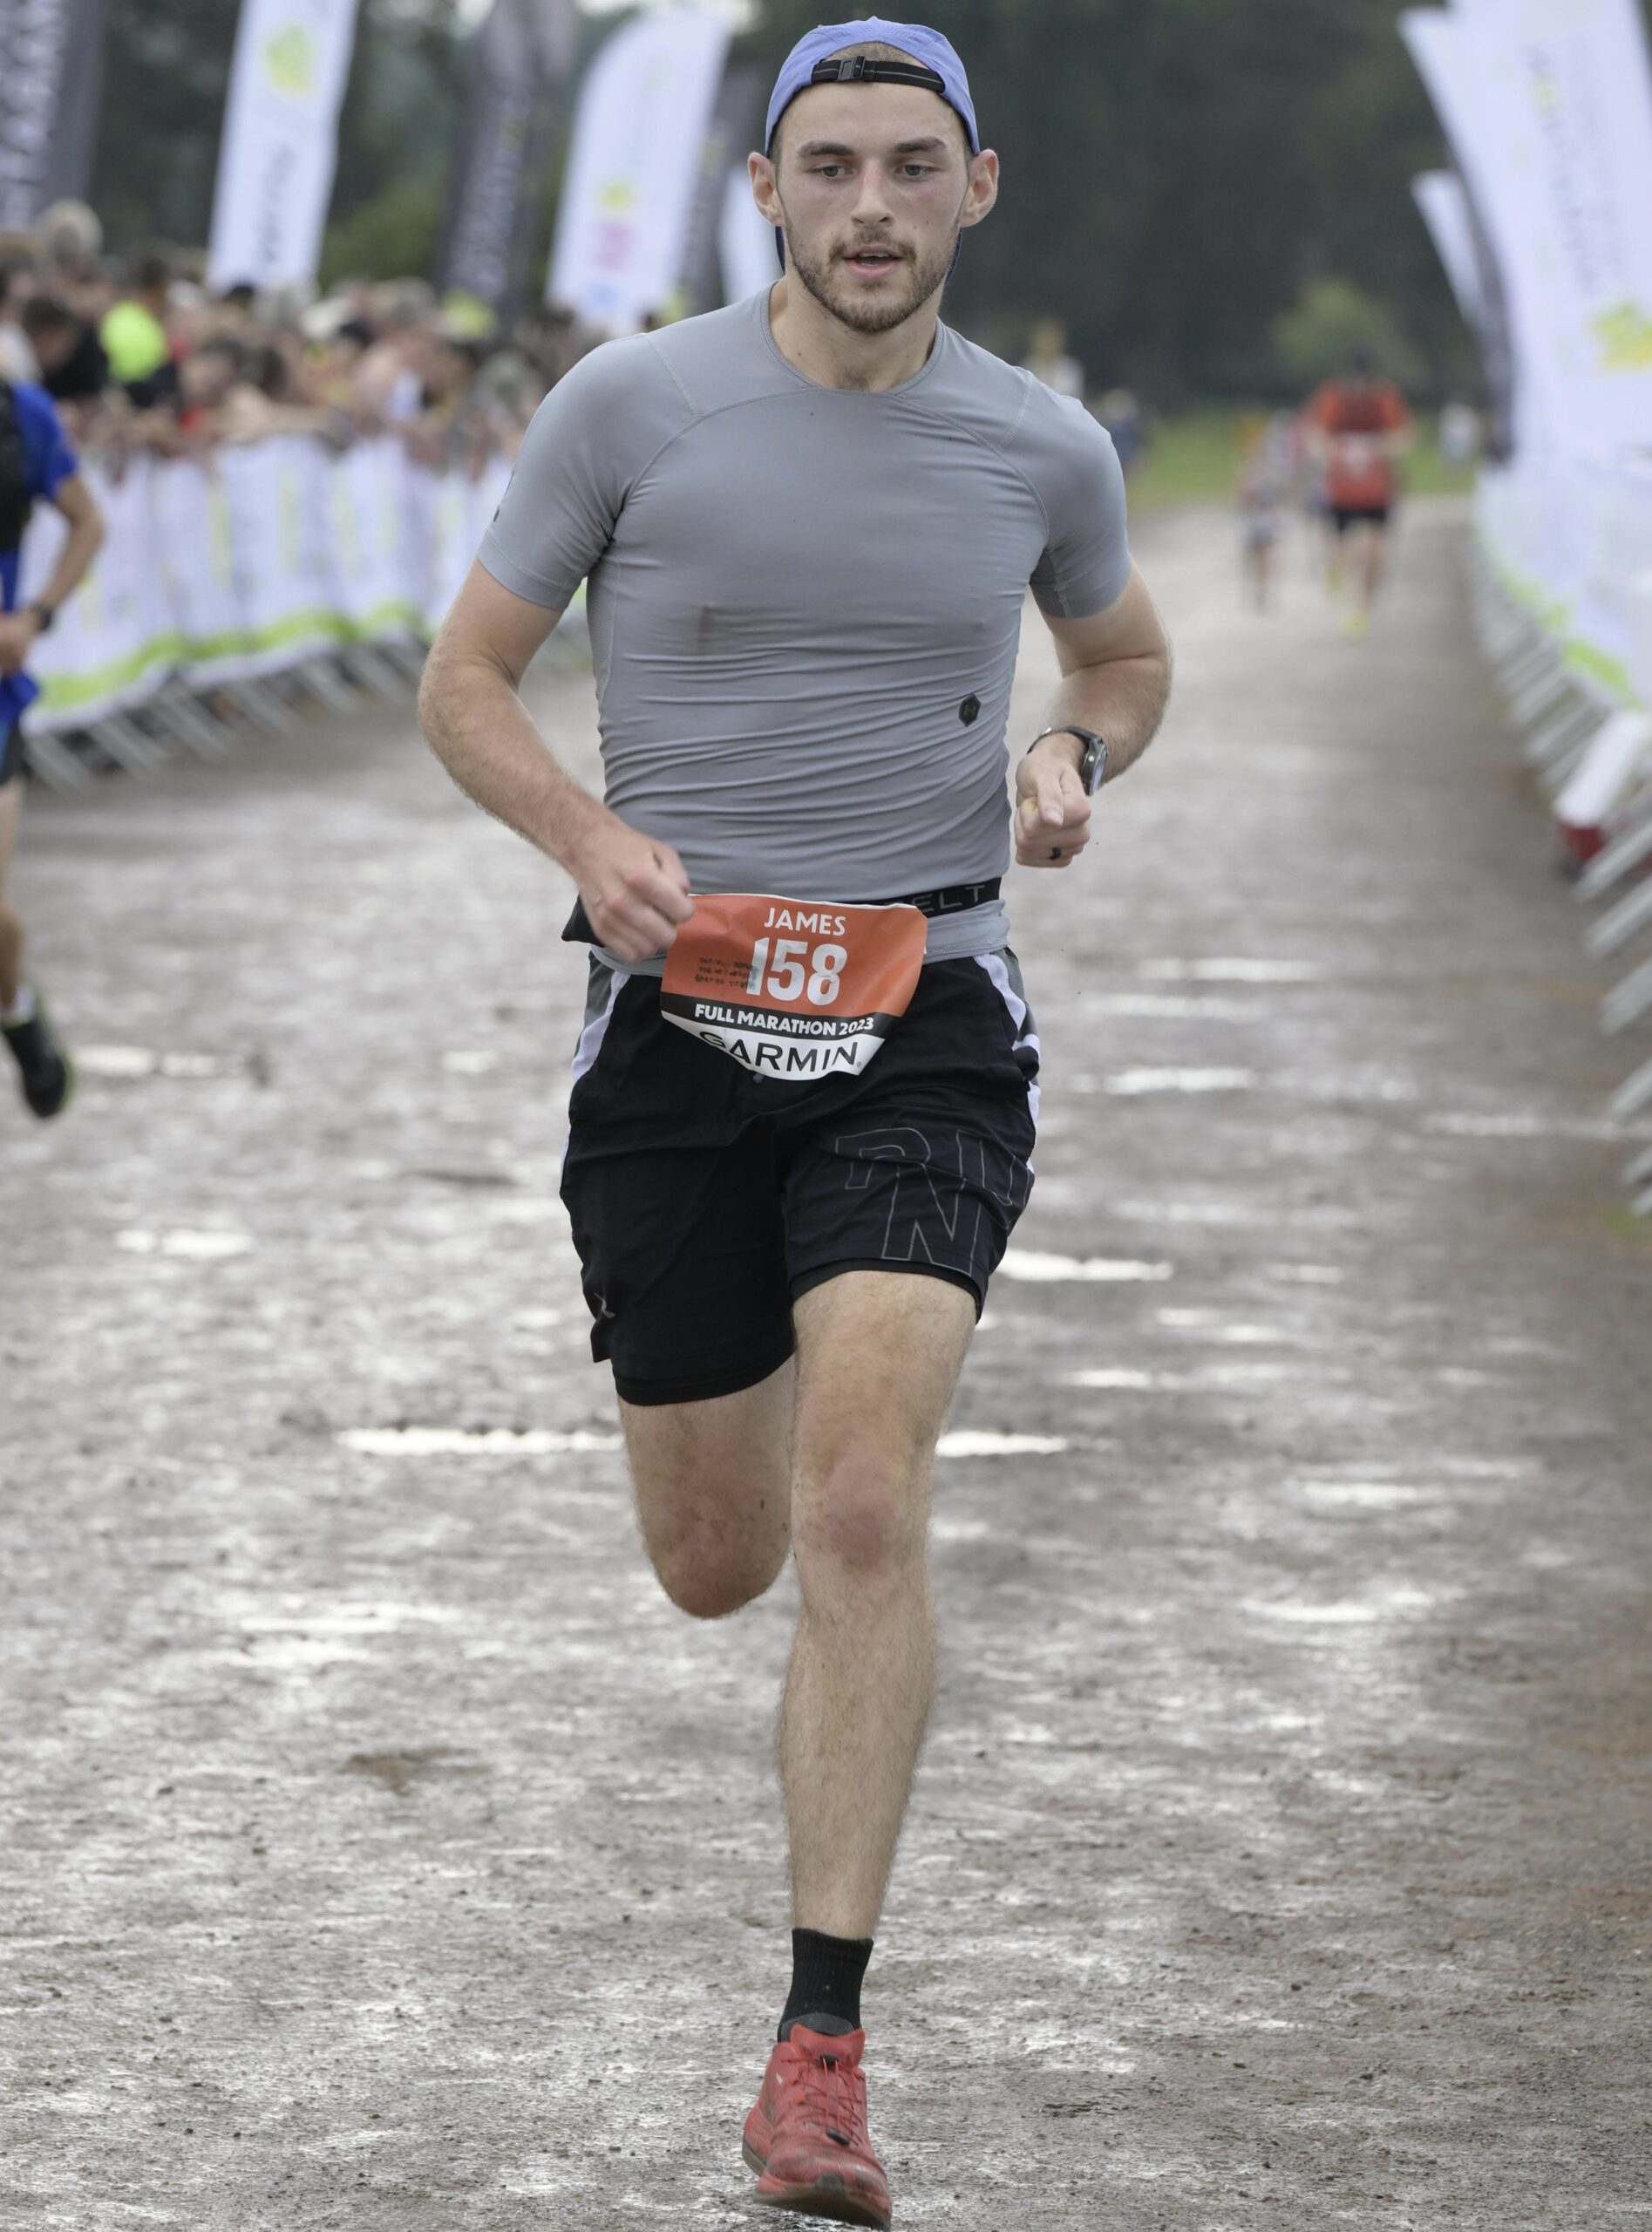 James Ultra Marathon